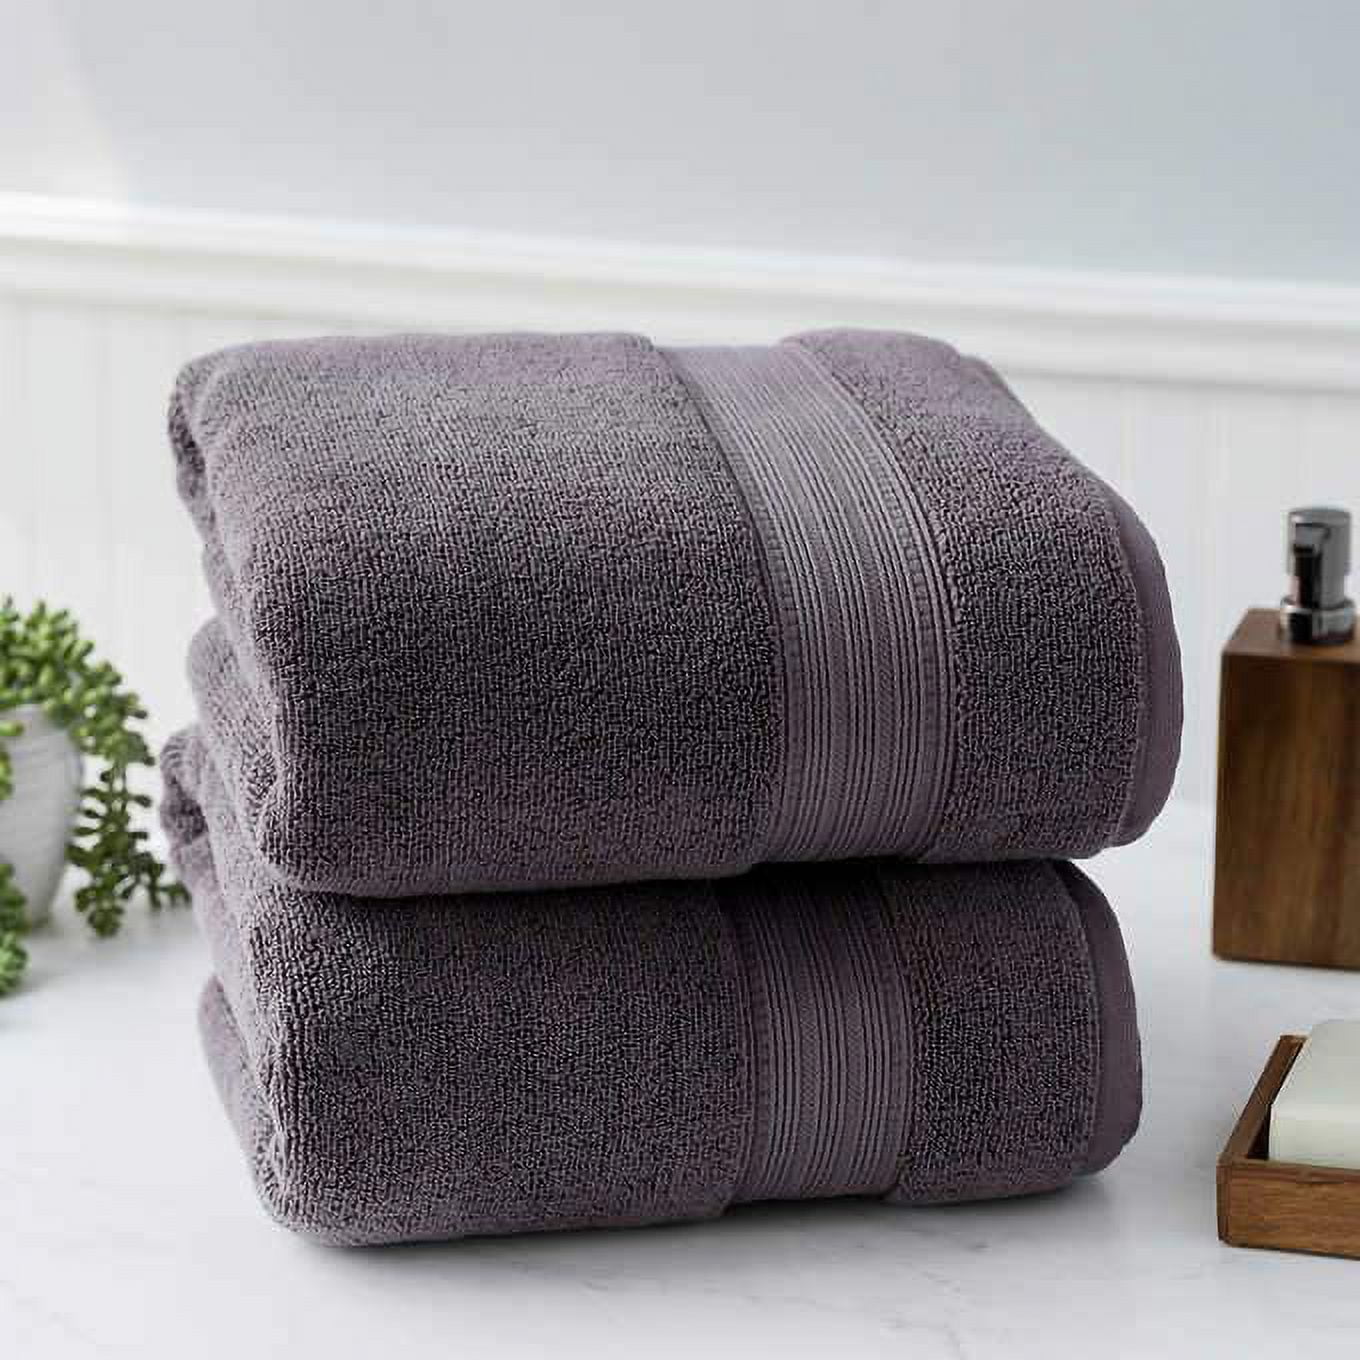 Charisma 100% Hygrocotton 4Pc Towel Set Hand Towels and Wash